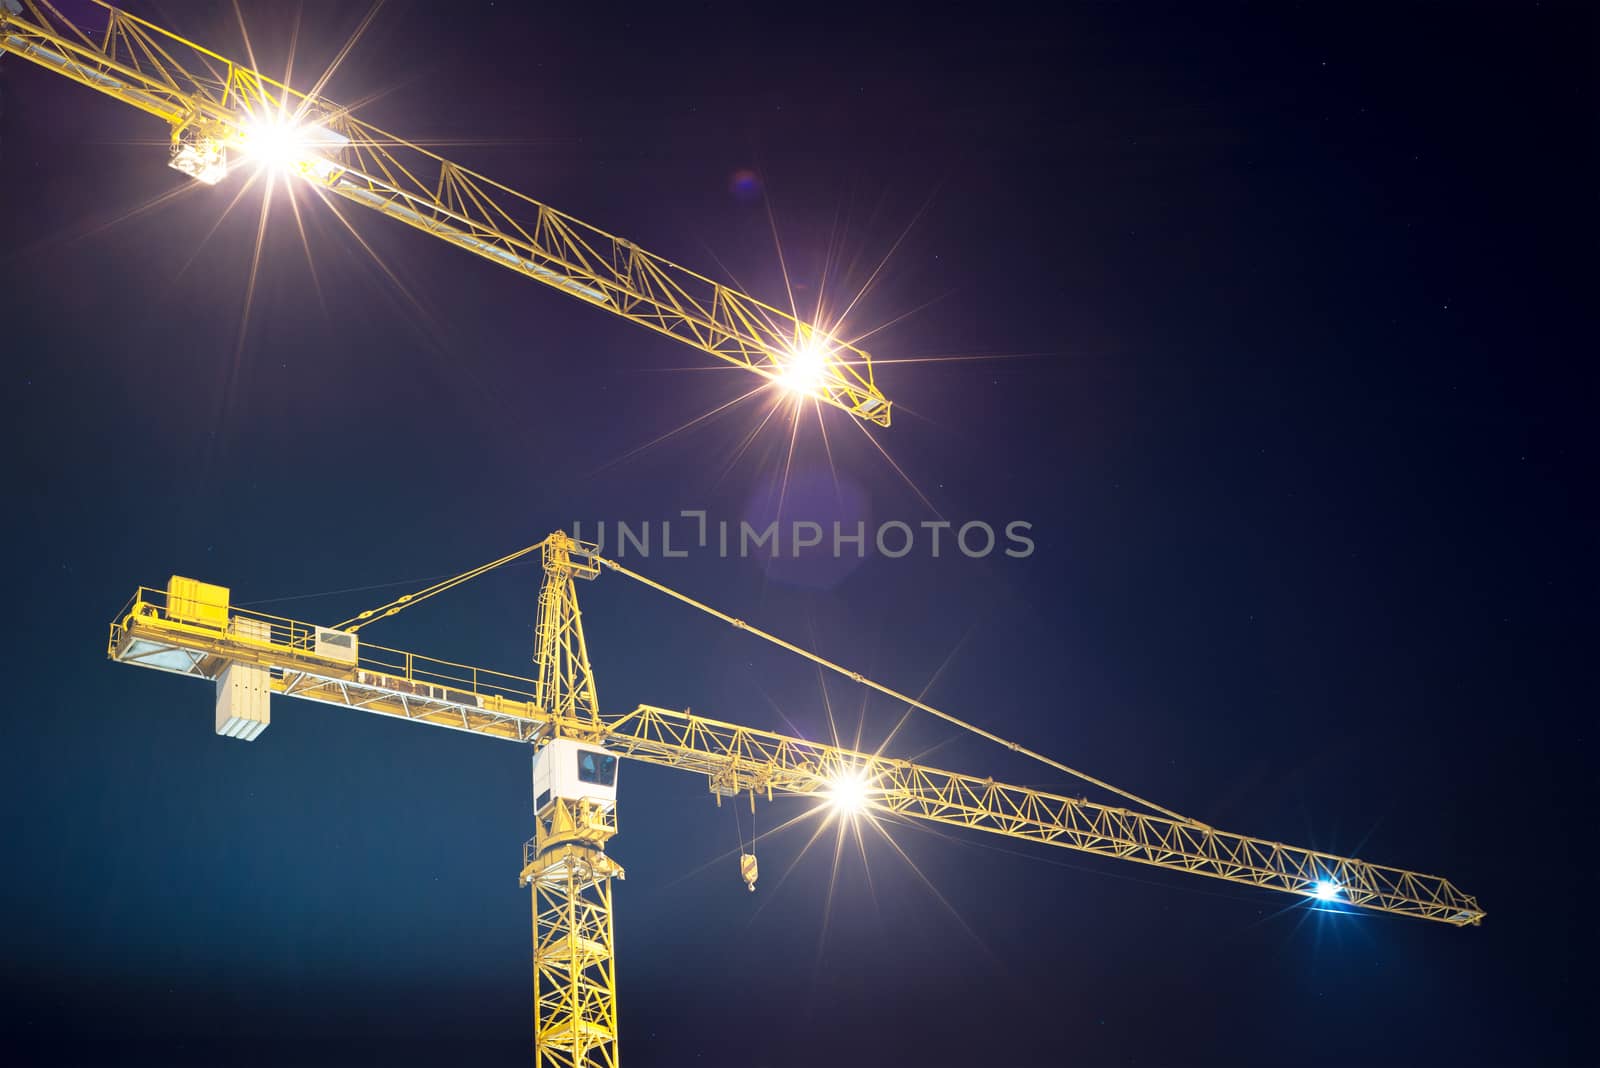 cranes and illumination at night by nejuras